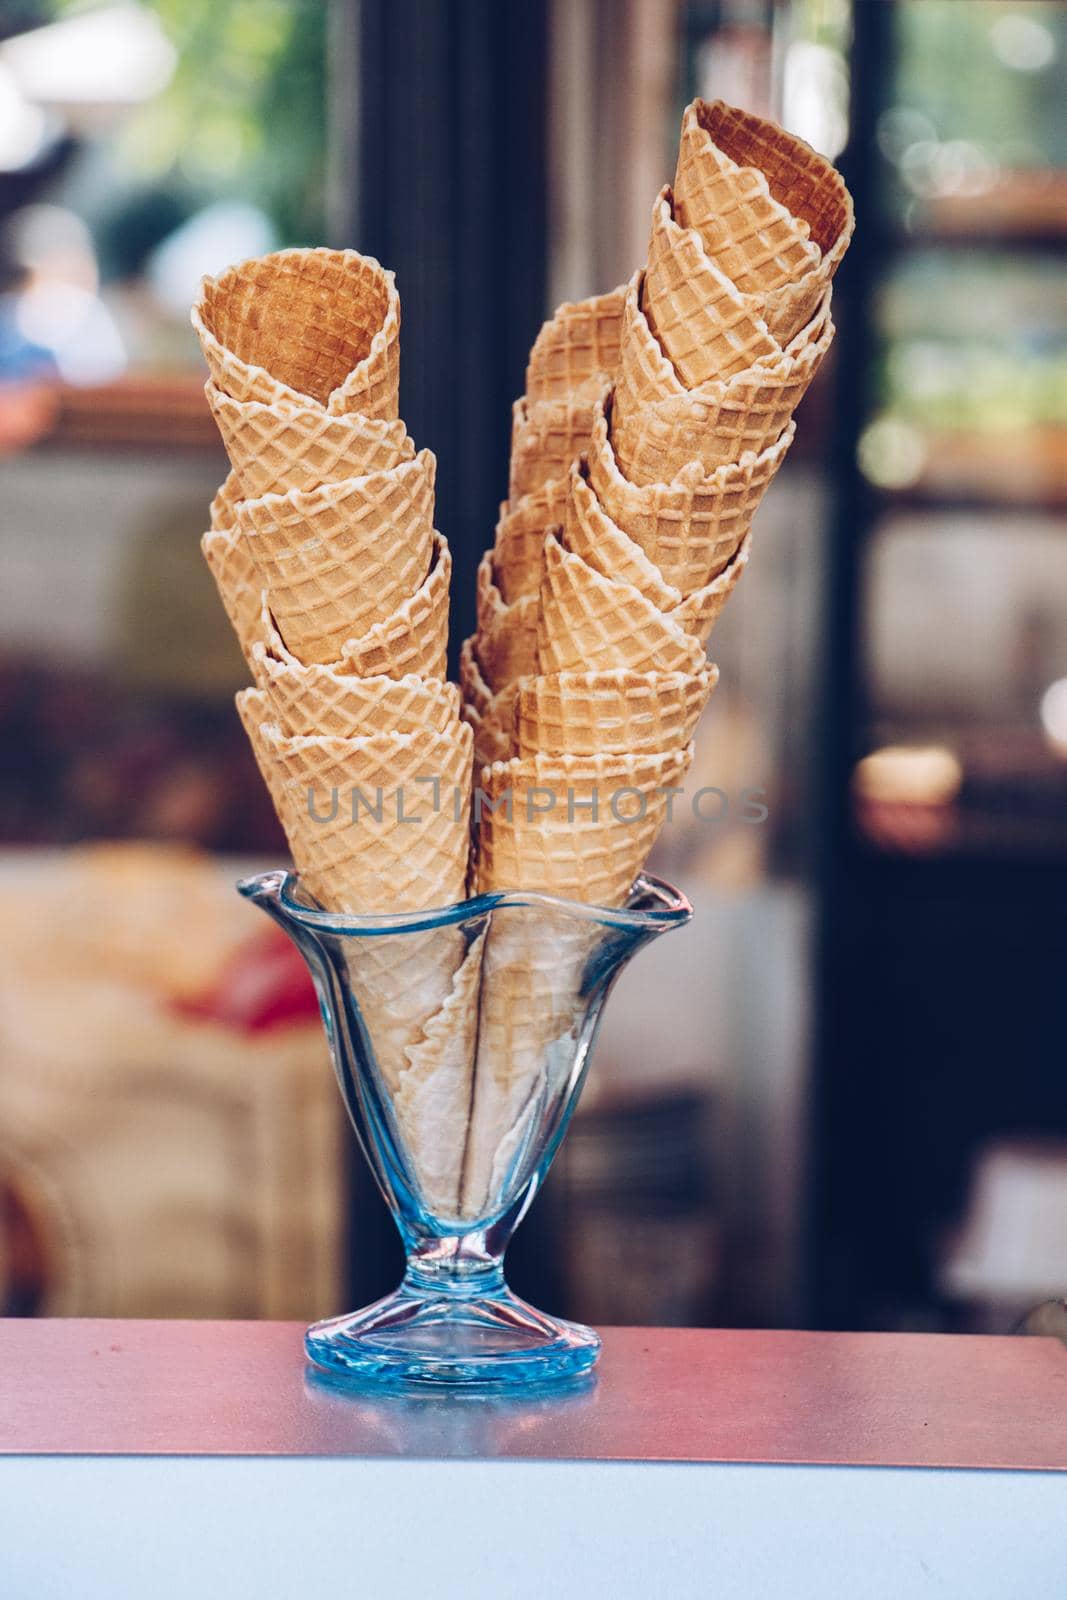 Waffle empty ice cream cones in a glass